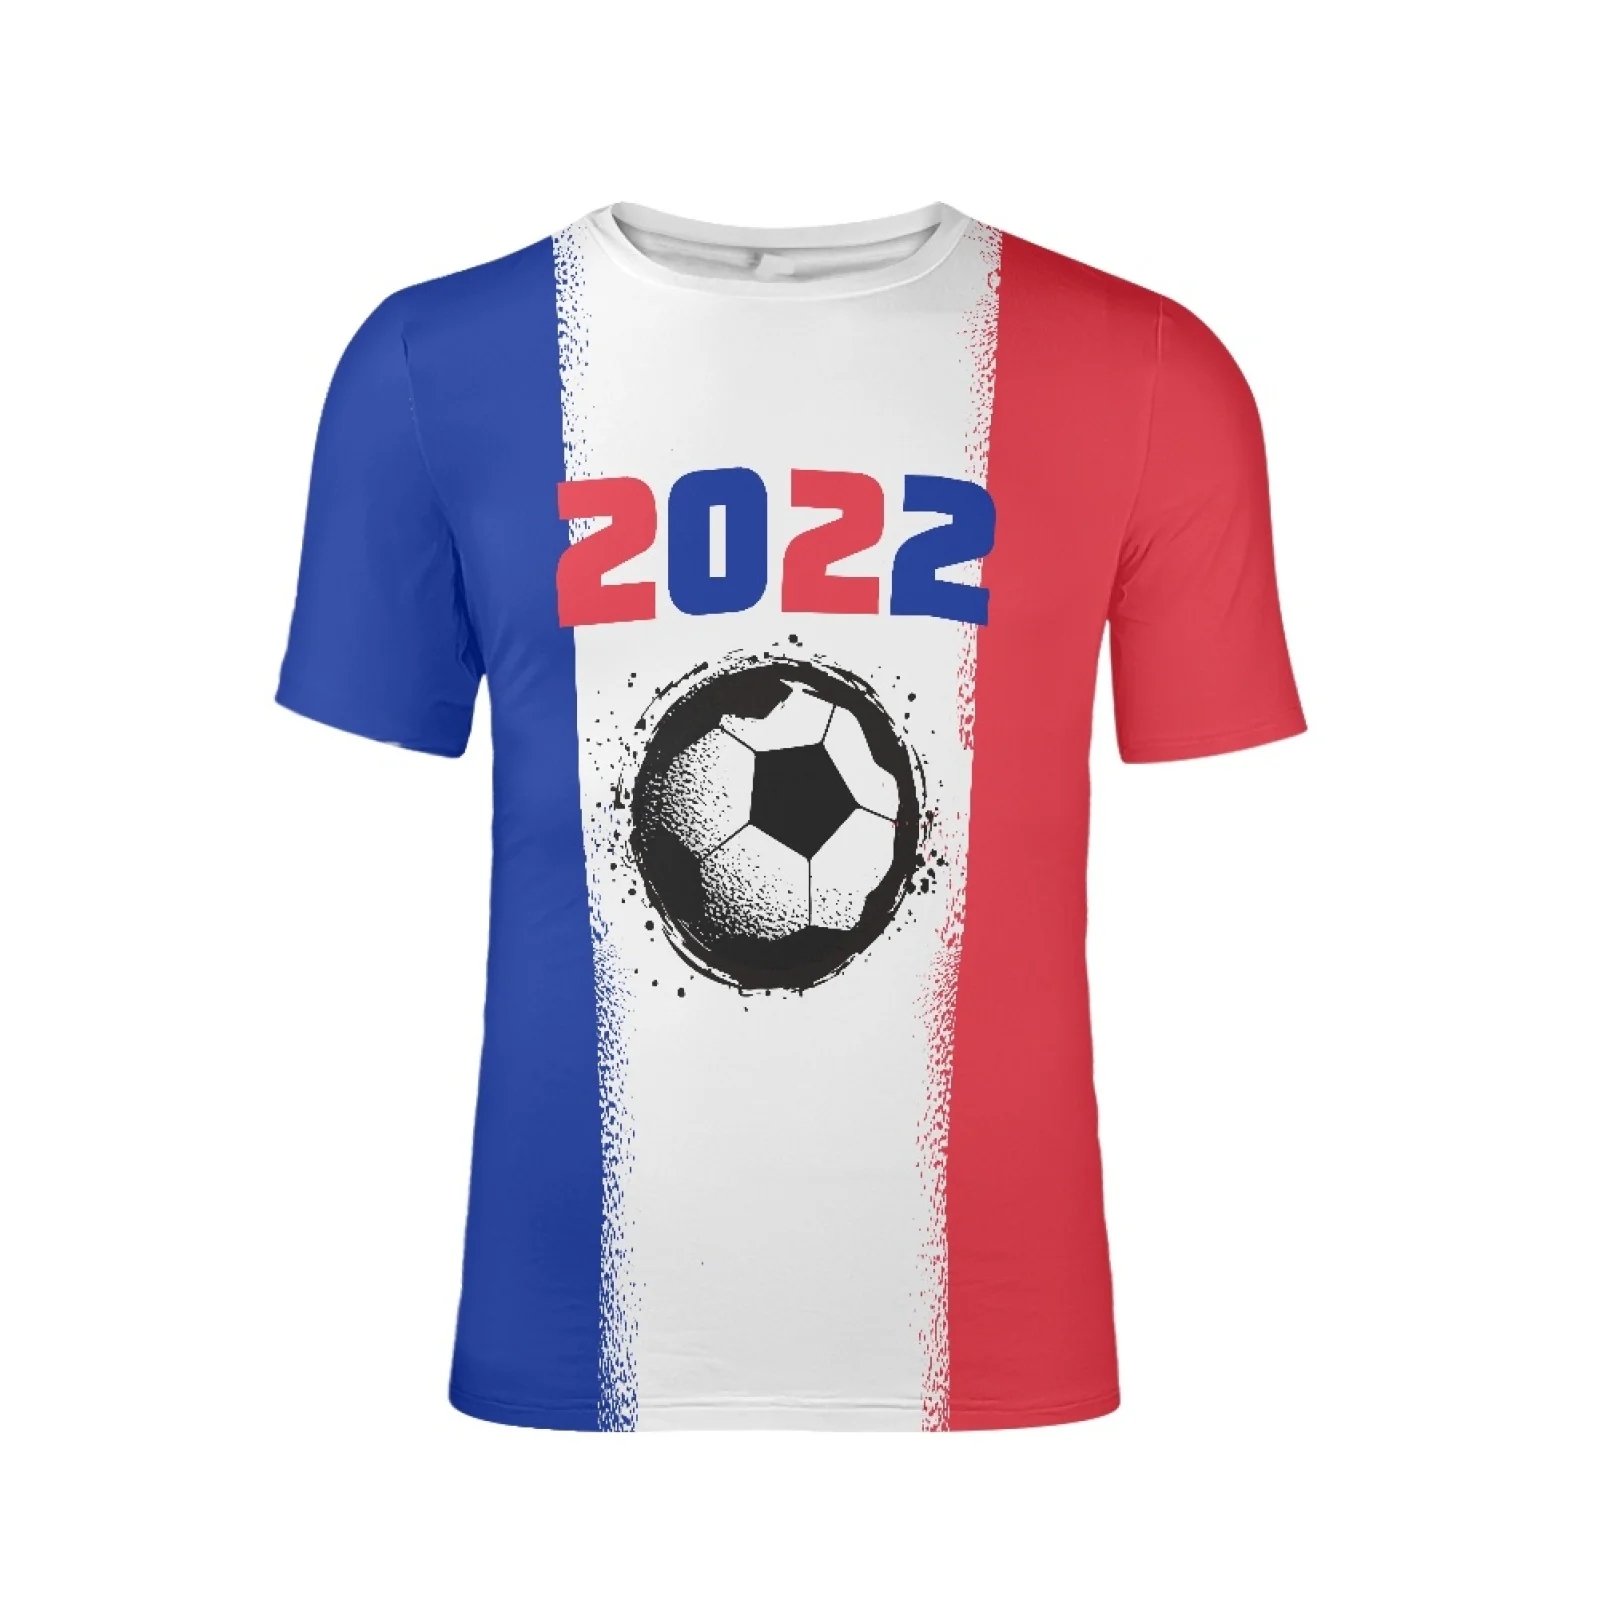 HAOHOAWU Sports Soccer Jersey Childrens France Soccer Jersey 2018 World Cup Team France Football T-Shirt Shorts Waist Child Boy 